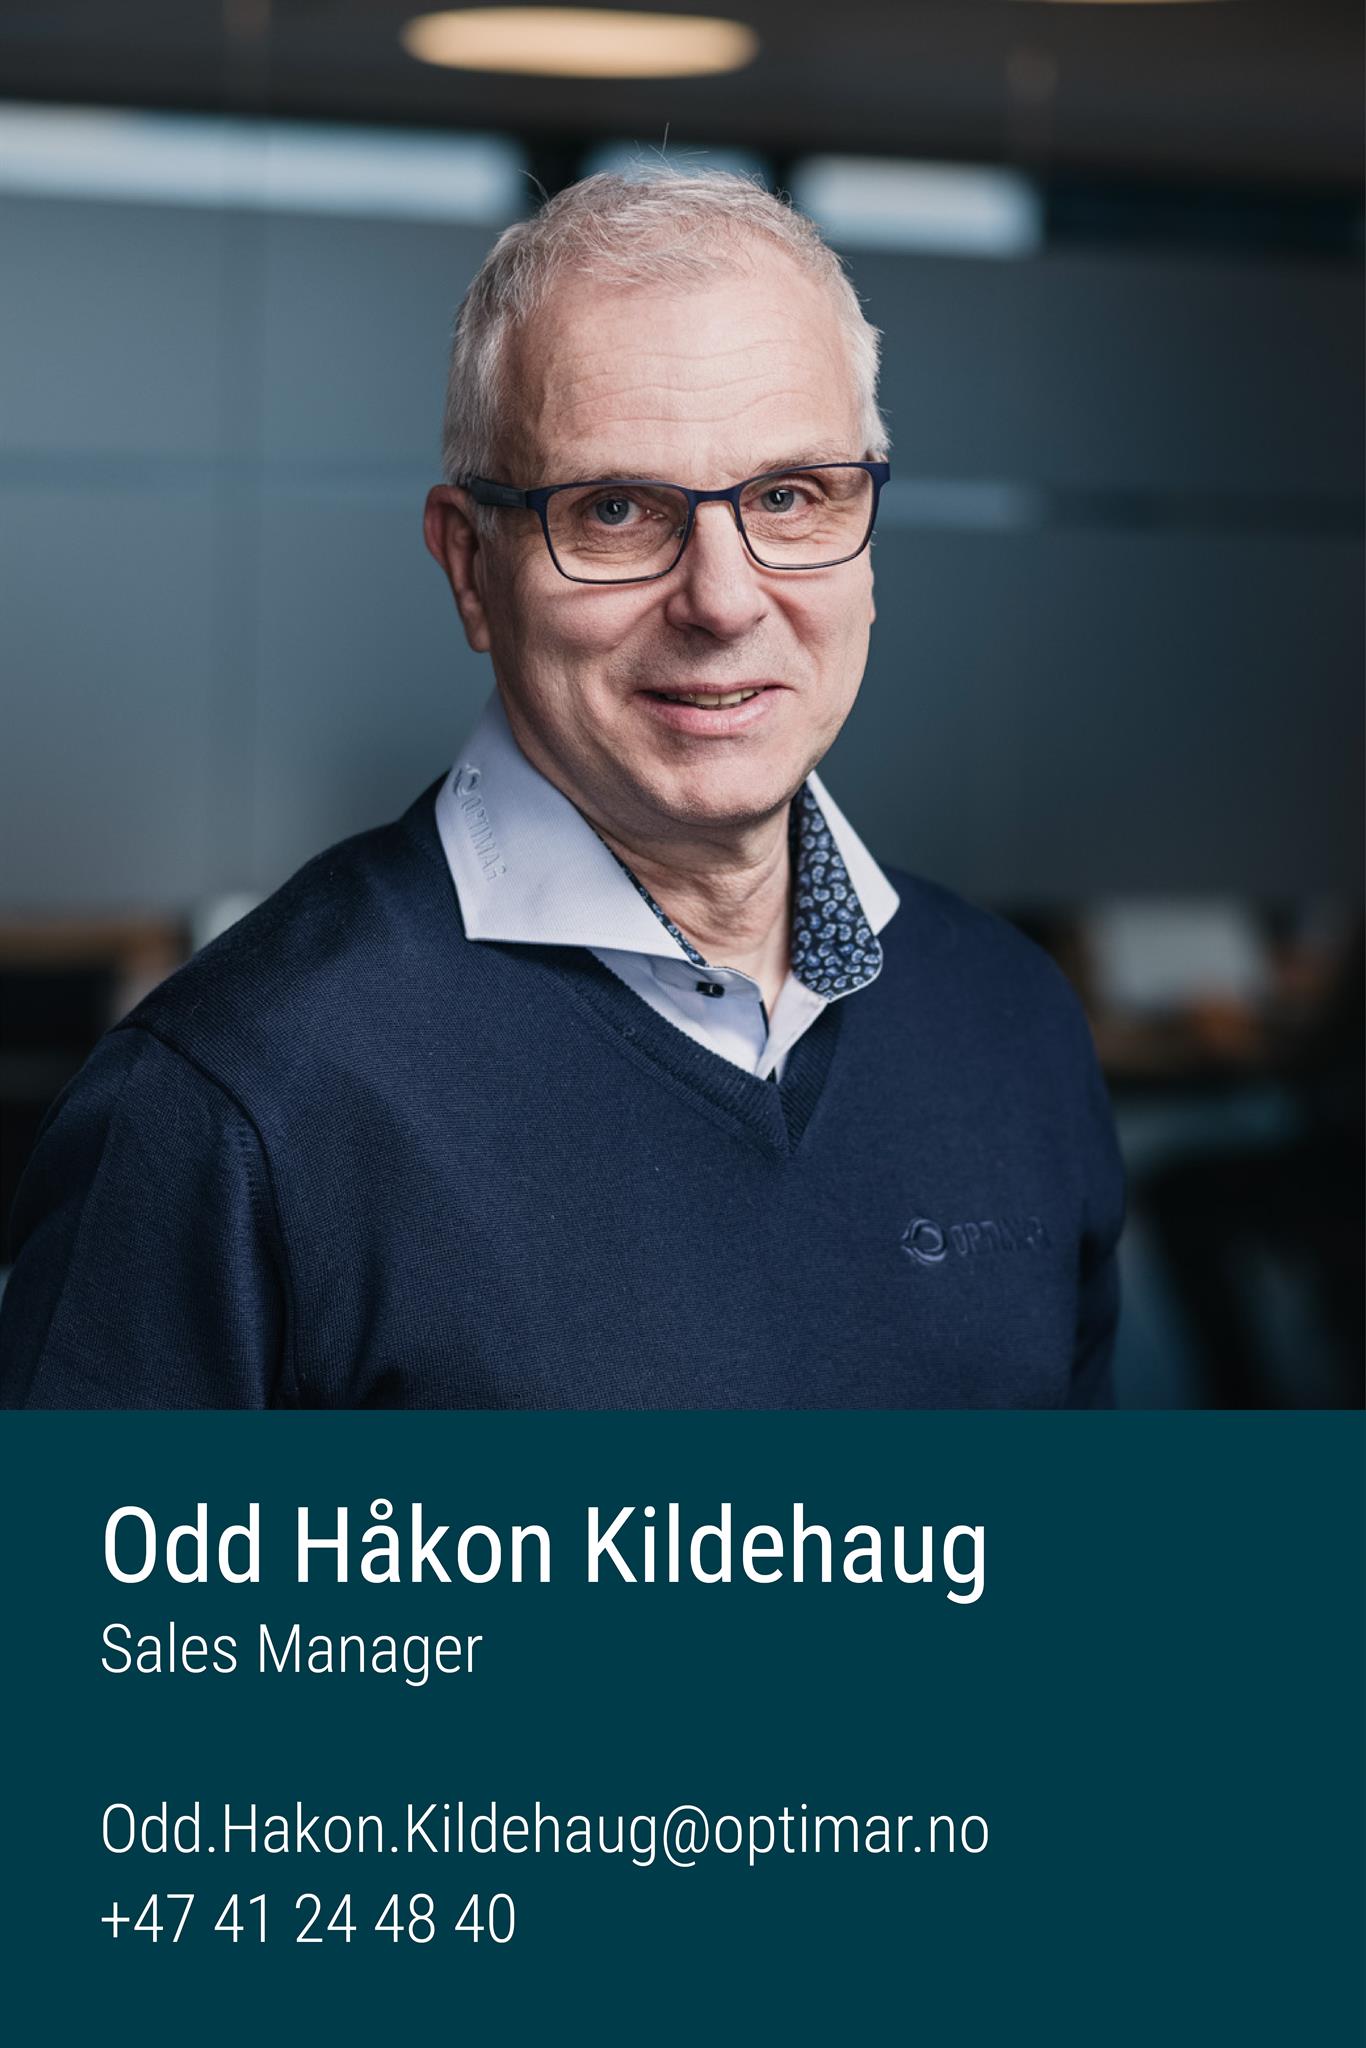 Odd Håkon Kildehaug